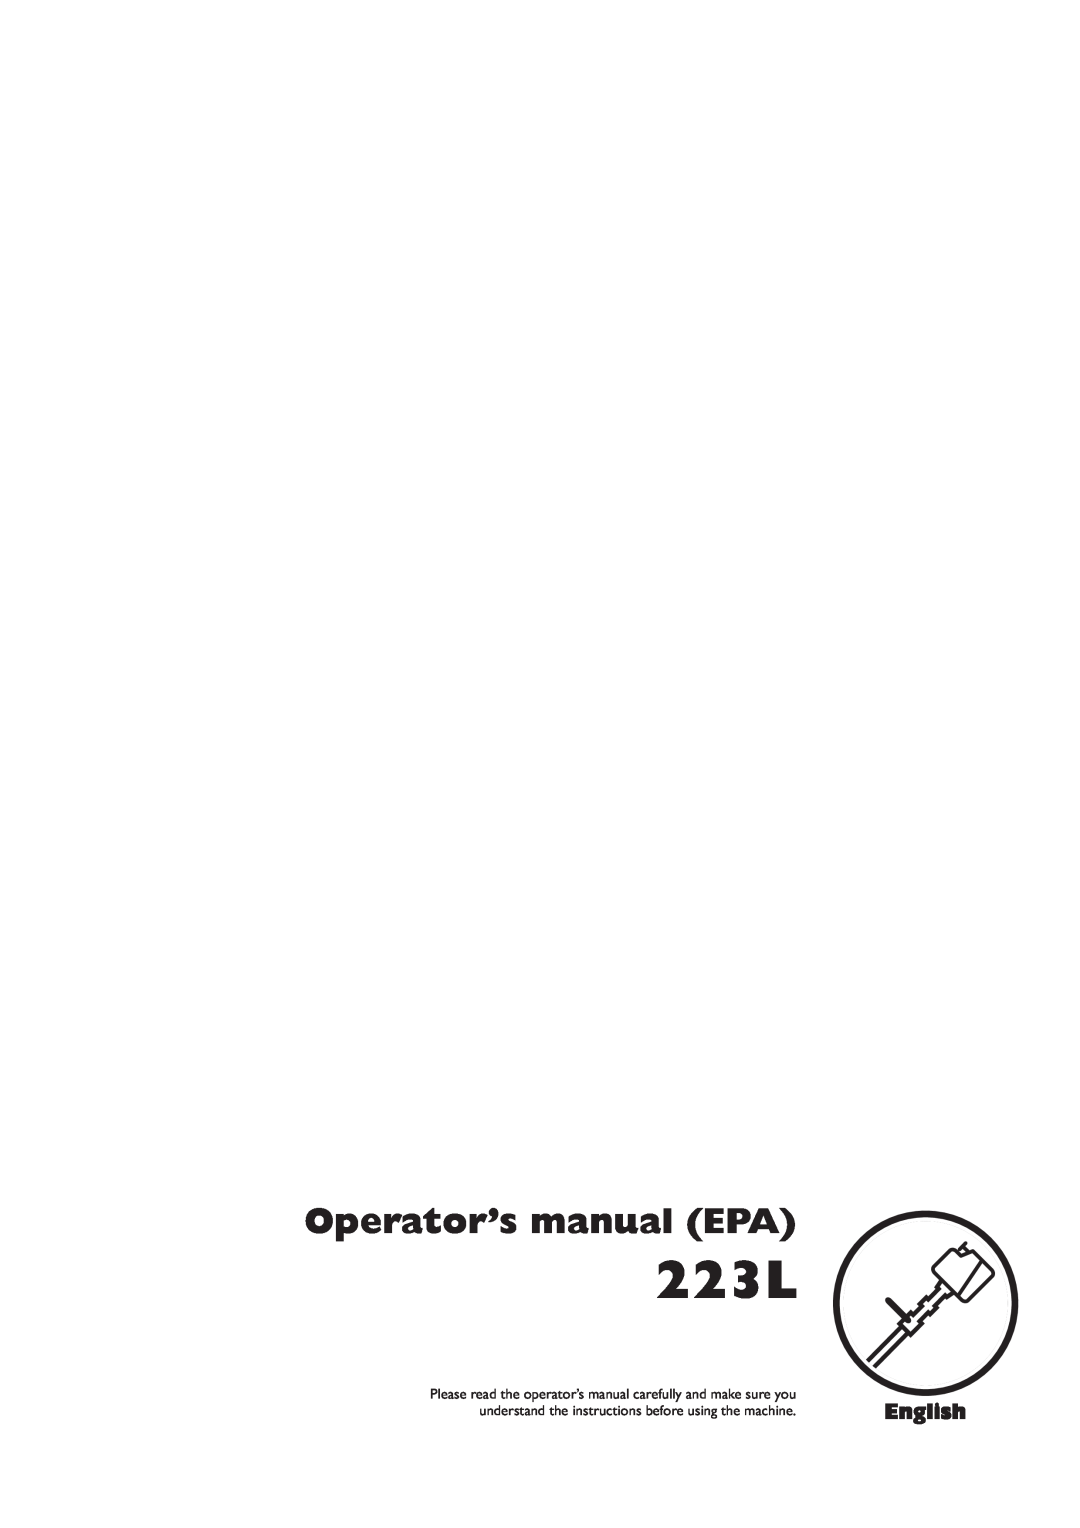 Husqvarna 223L manual Operator’s manual EPA, English 